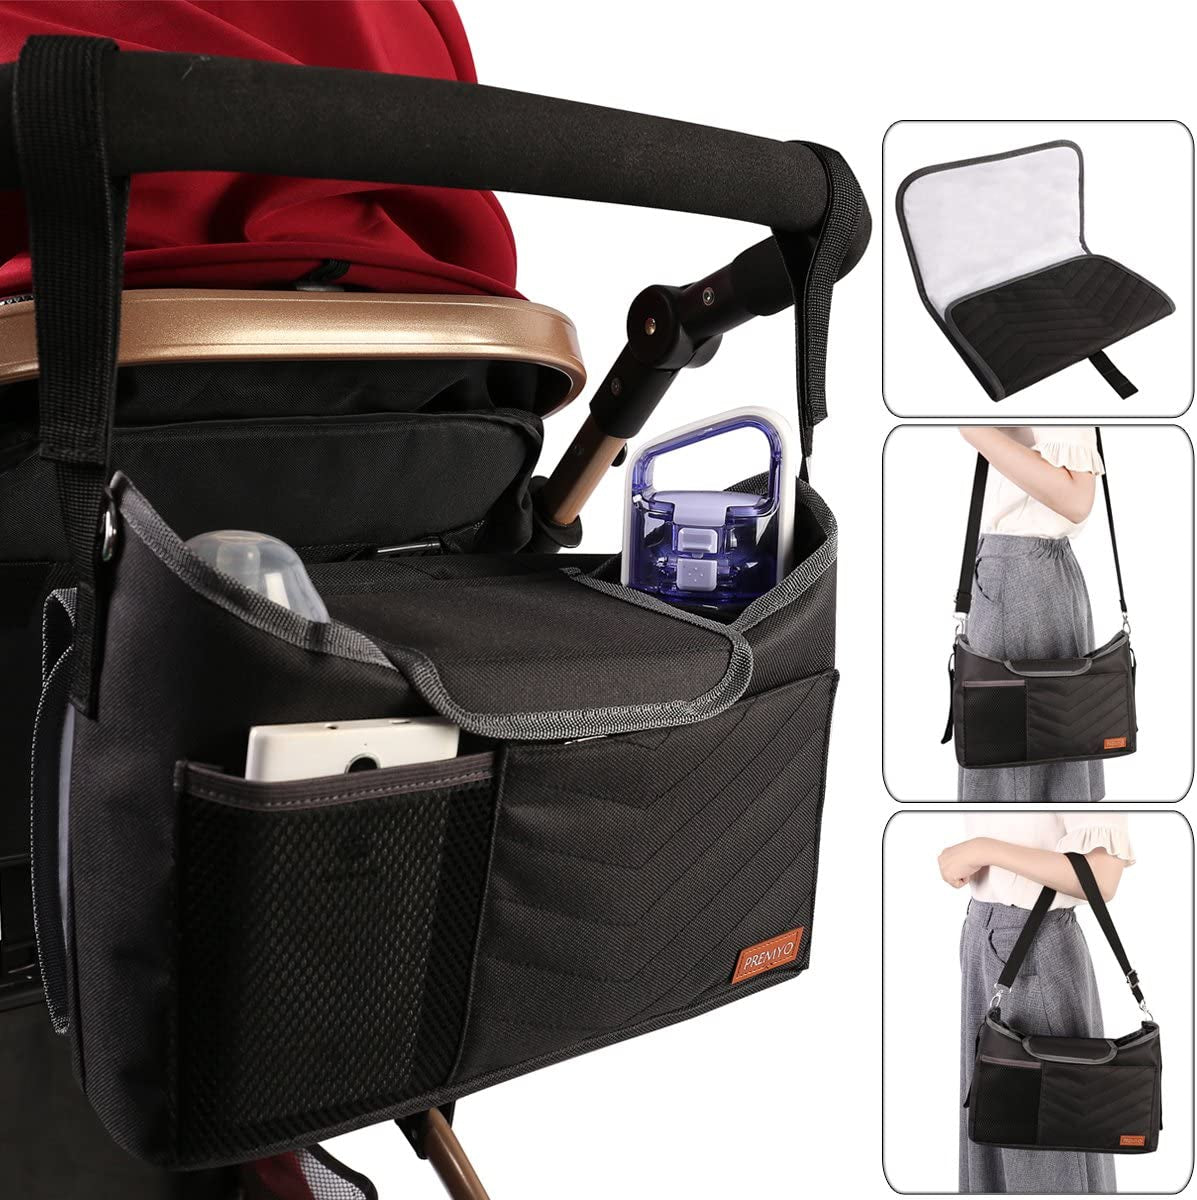 PREMYO Buggy Organiser Pram Bag Stroller - Cup Holder Universal Fit Spacious - with Changing Mat Shoulder Strap Black